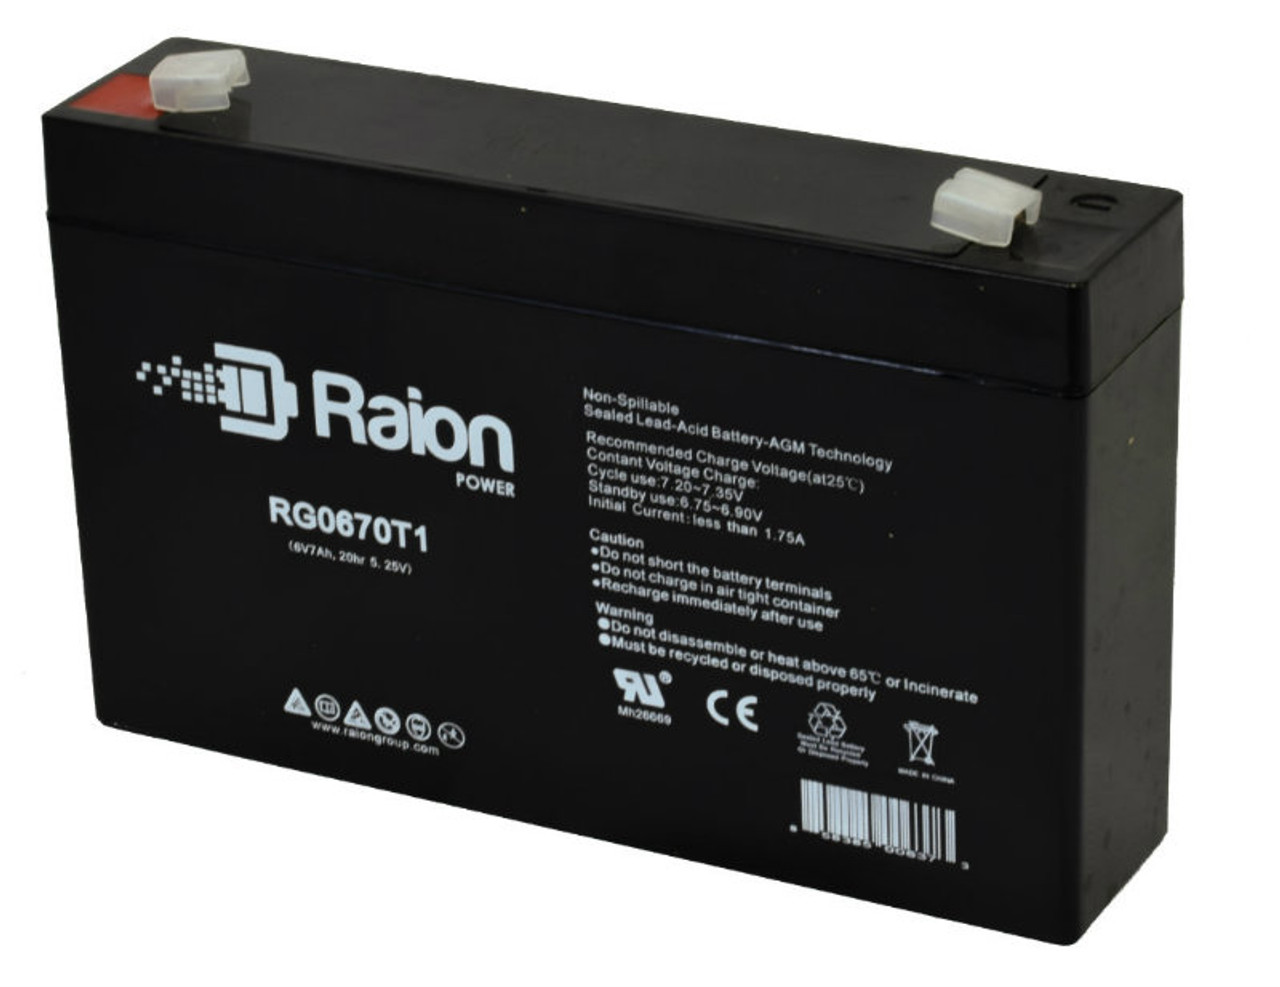 Raion Power RG0670T1 6V 7Ah Replacement Battery Cartridge for Cardiac Pacemakers ECD-APU Defibrillator medical equipment